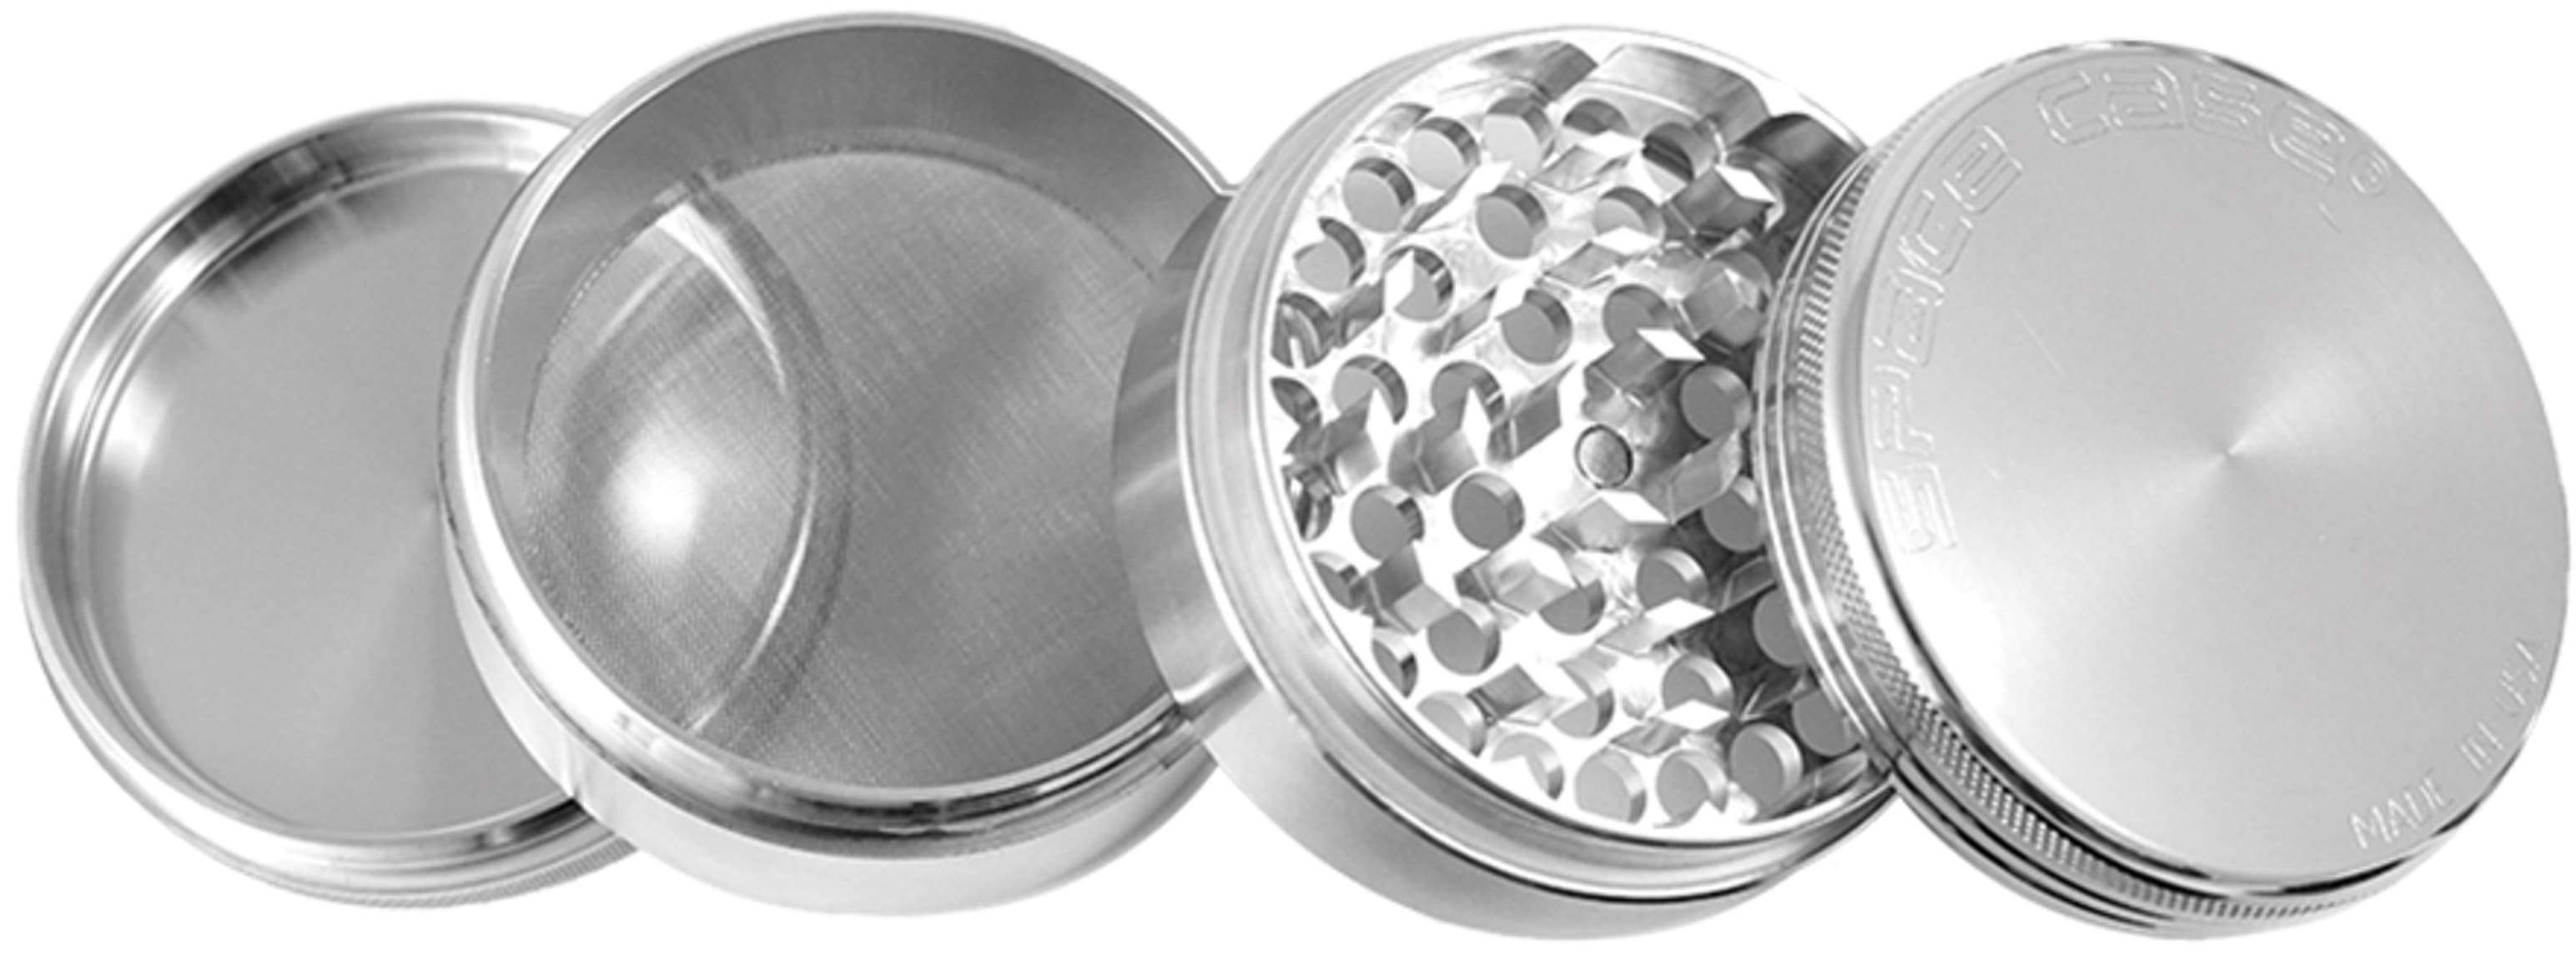 Space Case Aluminium Crystal Catcher - 4 Sizes image 2